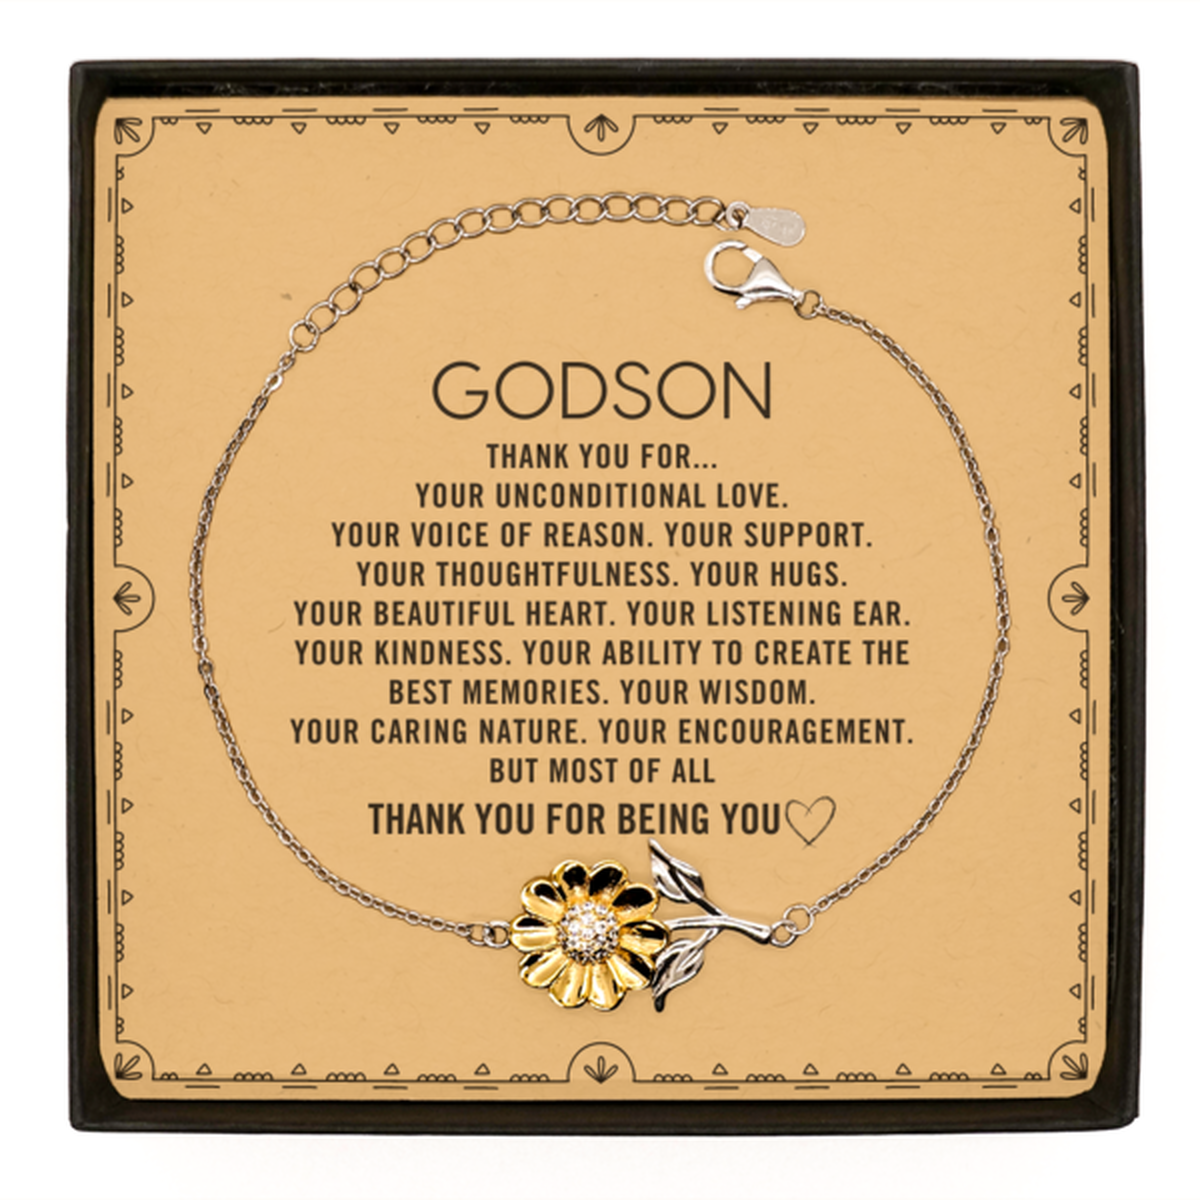 Godson Sunflower Bracelet Custom, Message Card Gifts For Godson Christmas Graduation Birthday Gifts for Men Women Godson Thank you for Your unconditional love